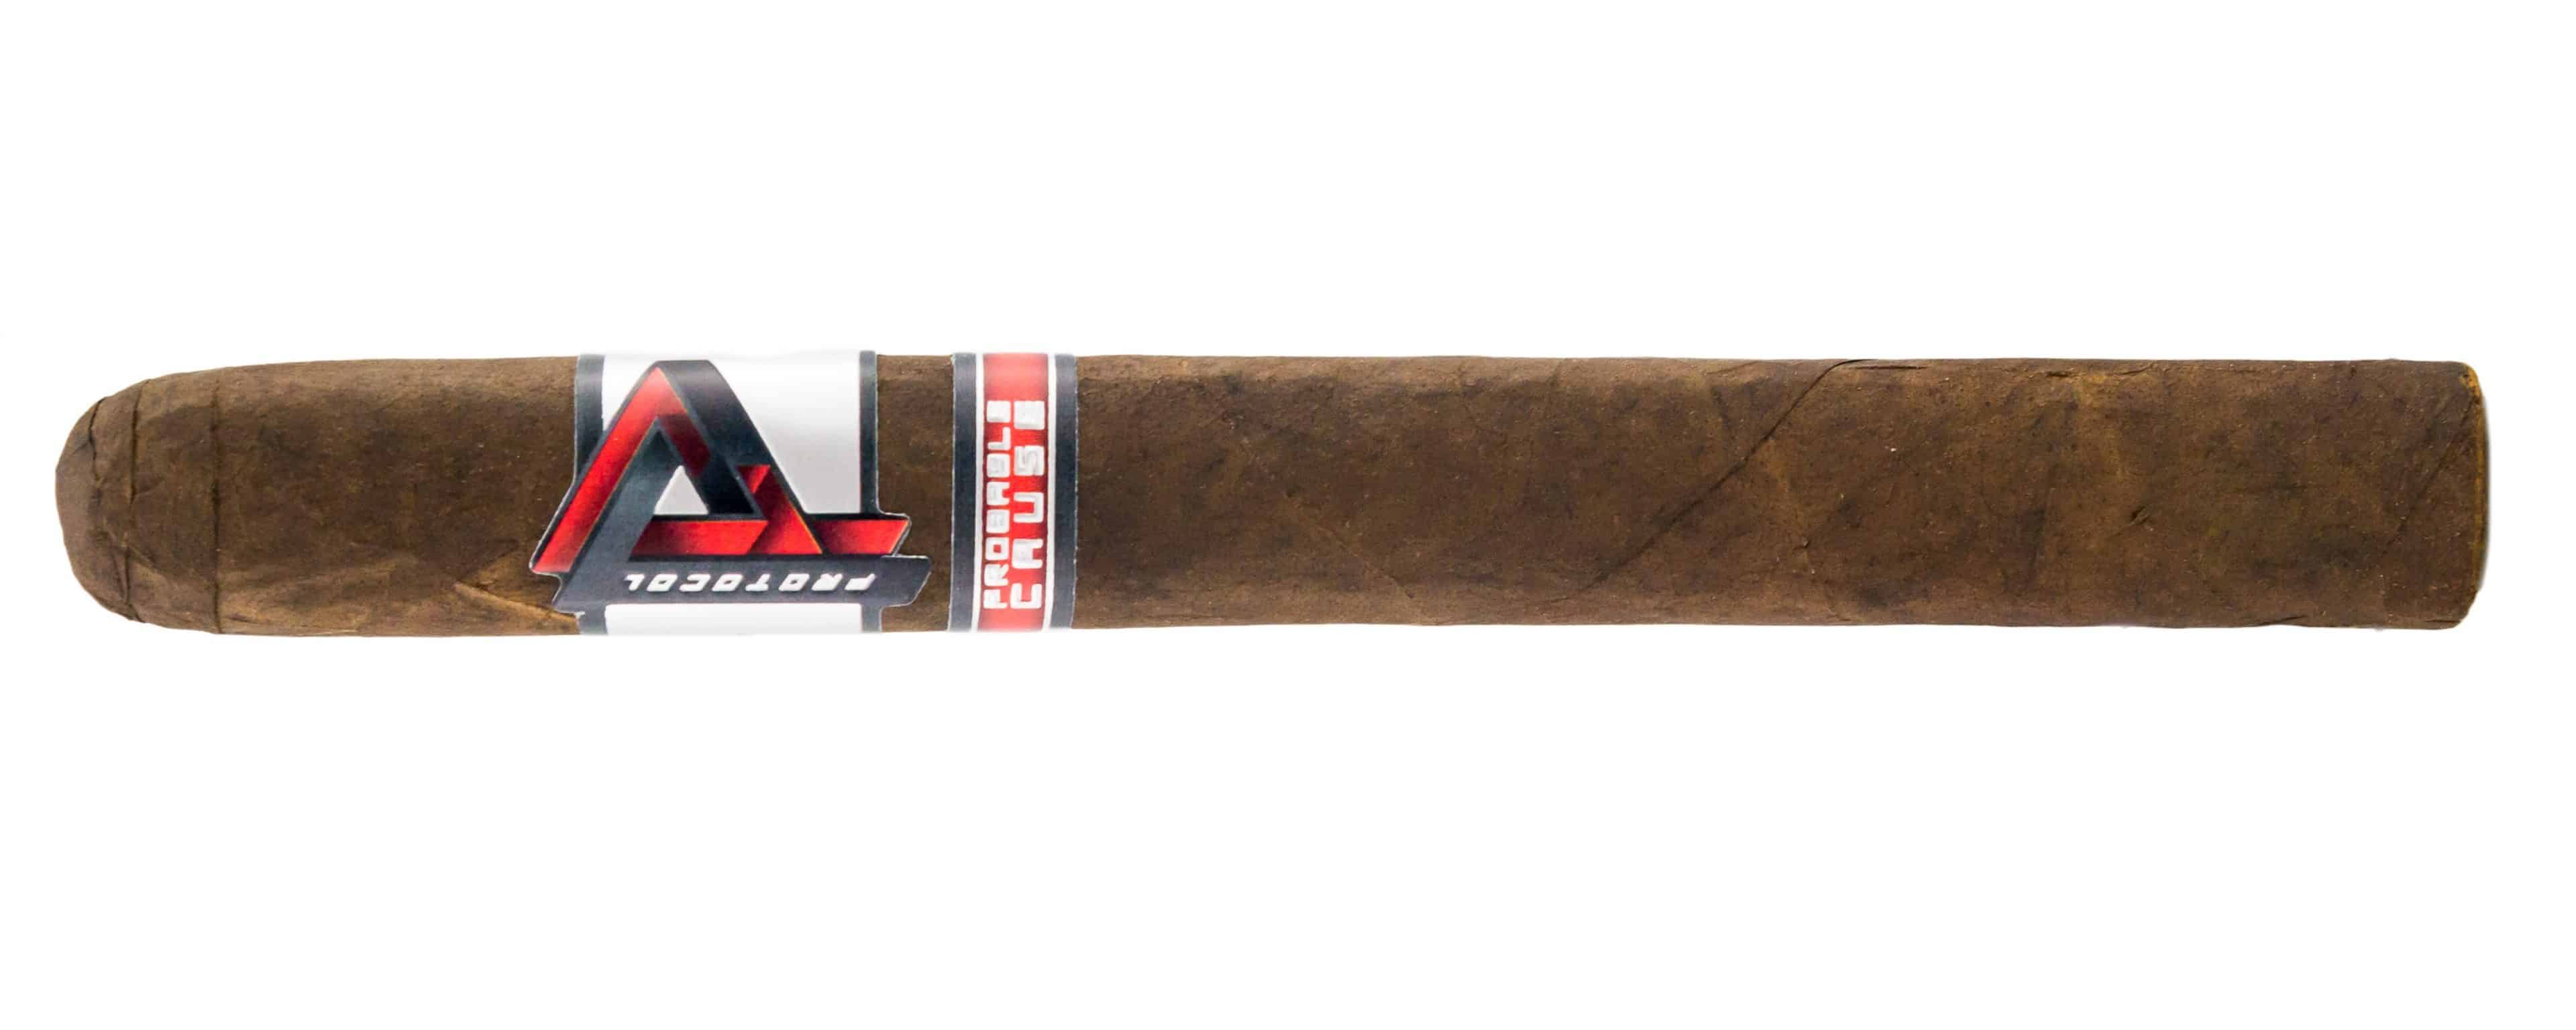 Blind Cigar Review: Cubariqueño | Protocol Probable Cause Churchill